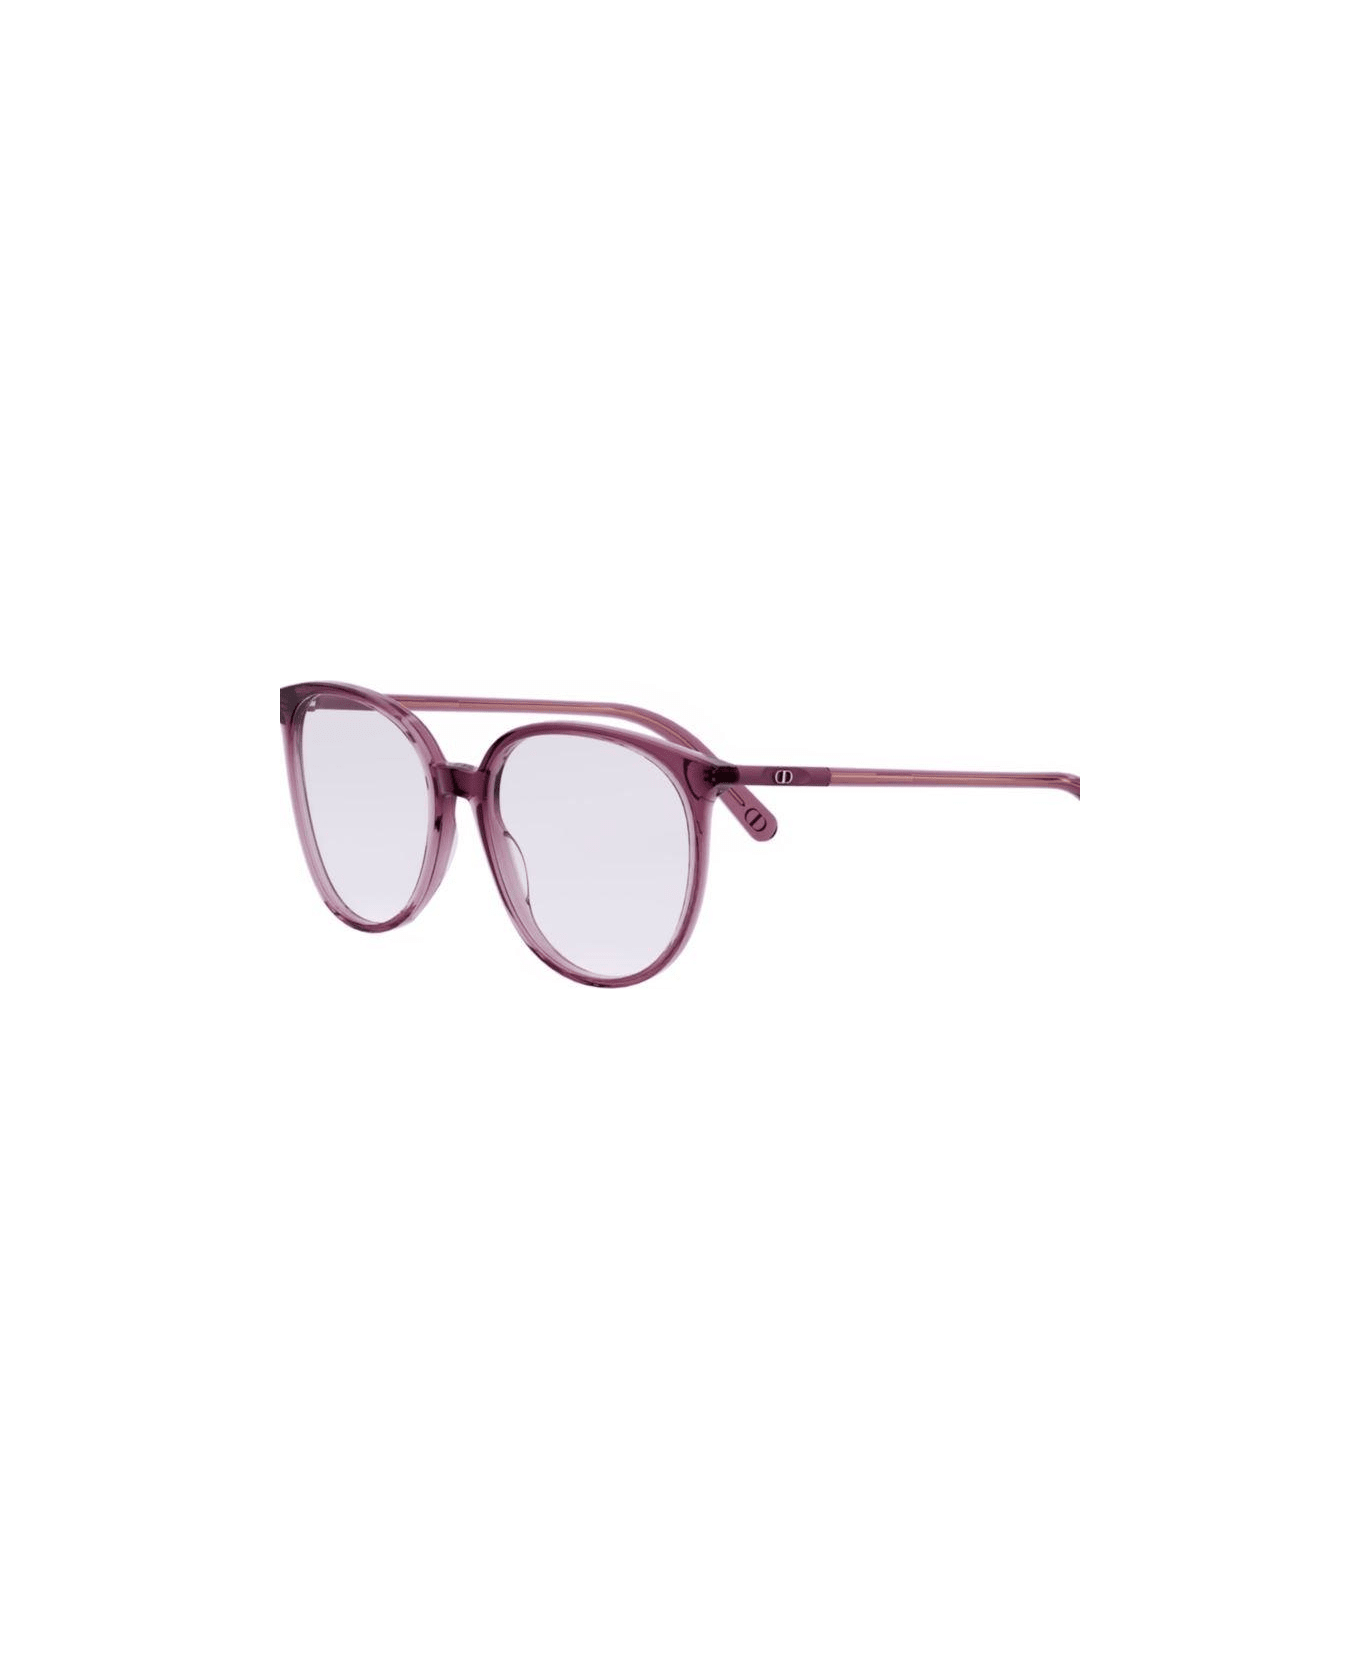 Dior Eyewear Round Frame Glasses - 3600